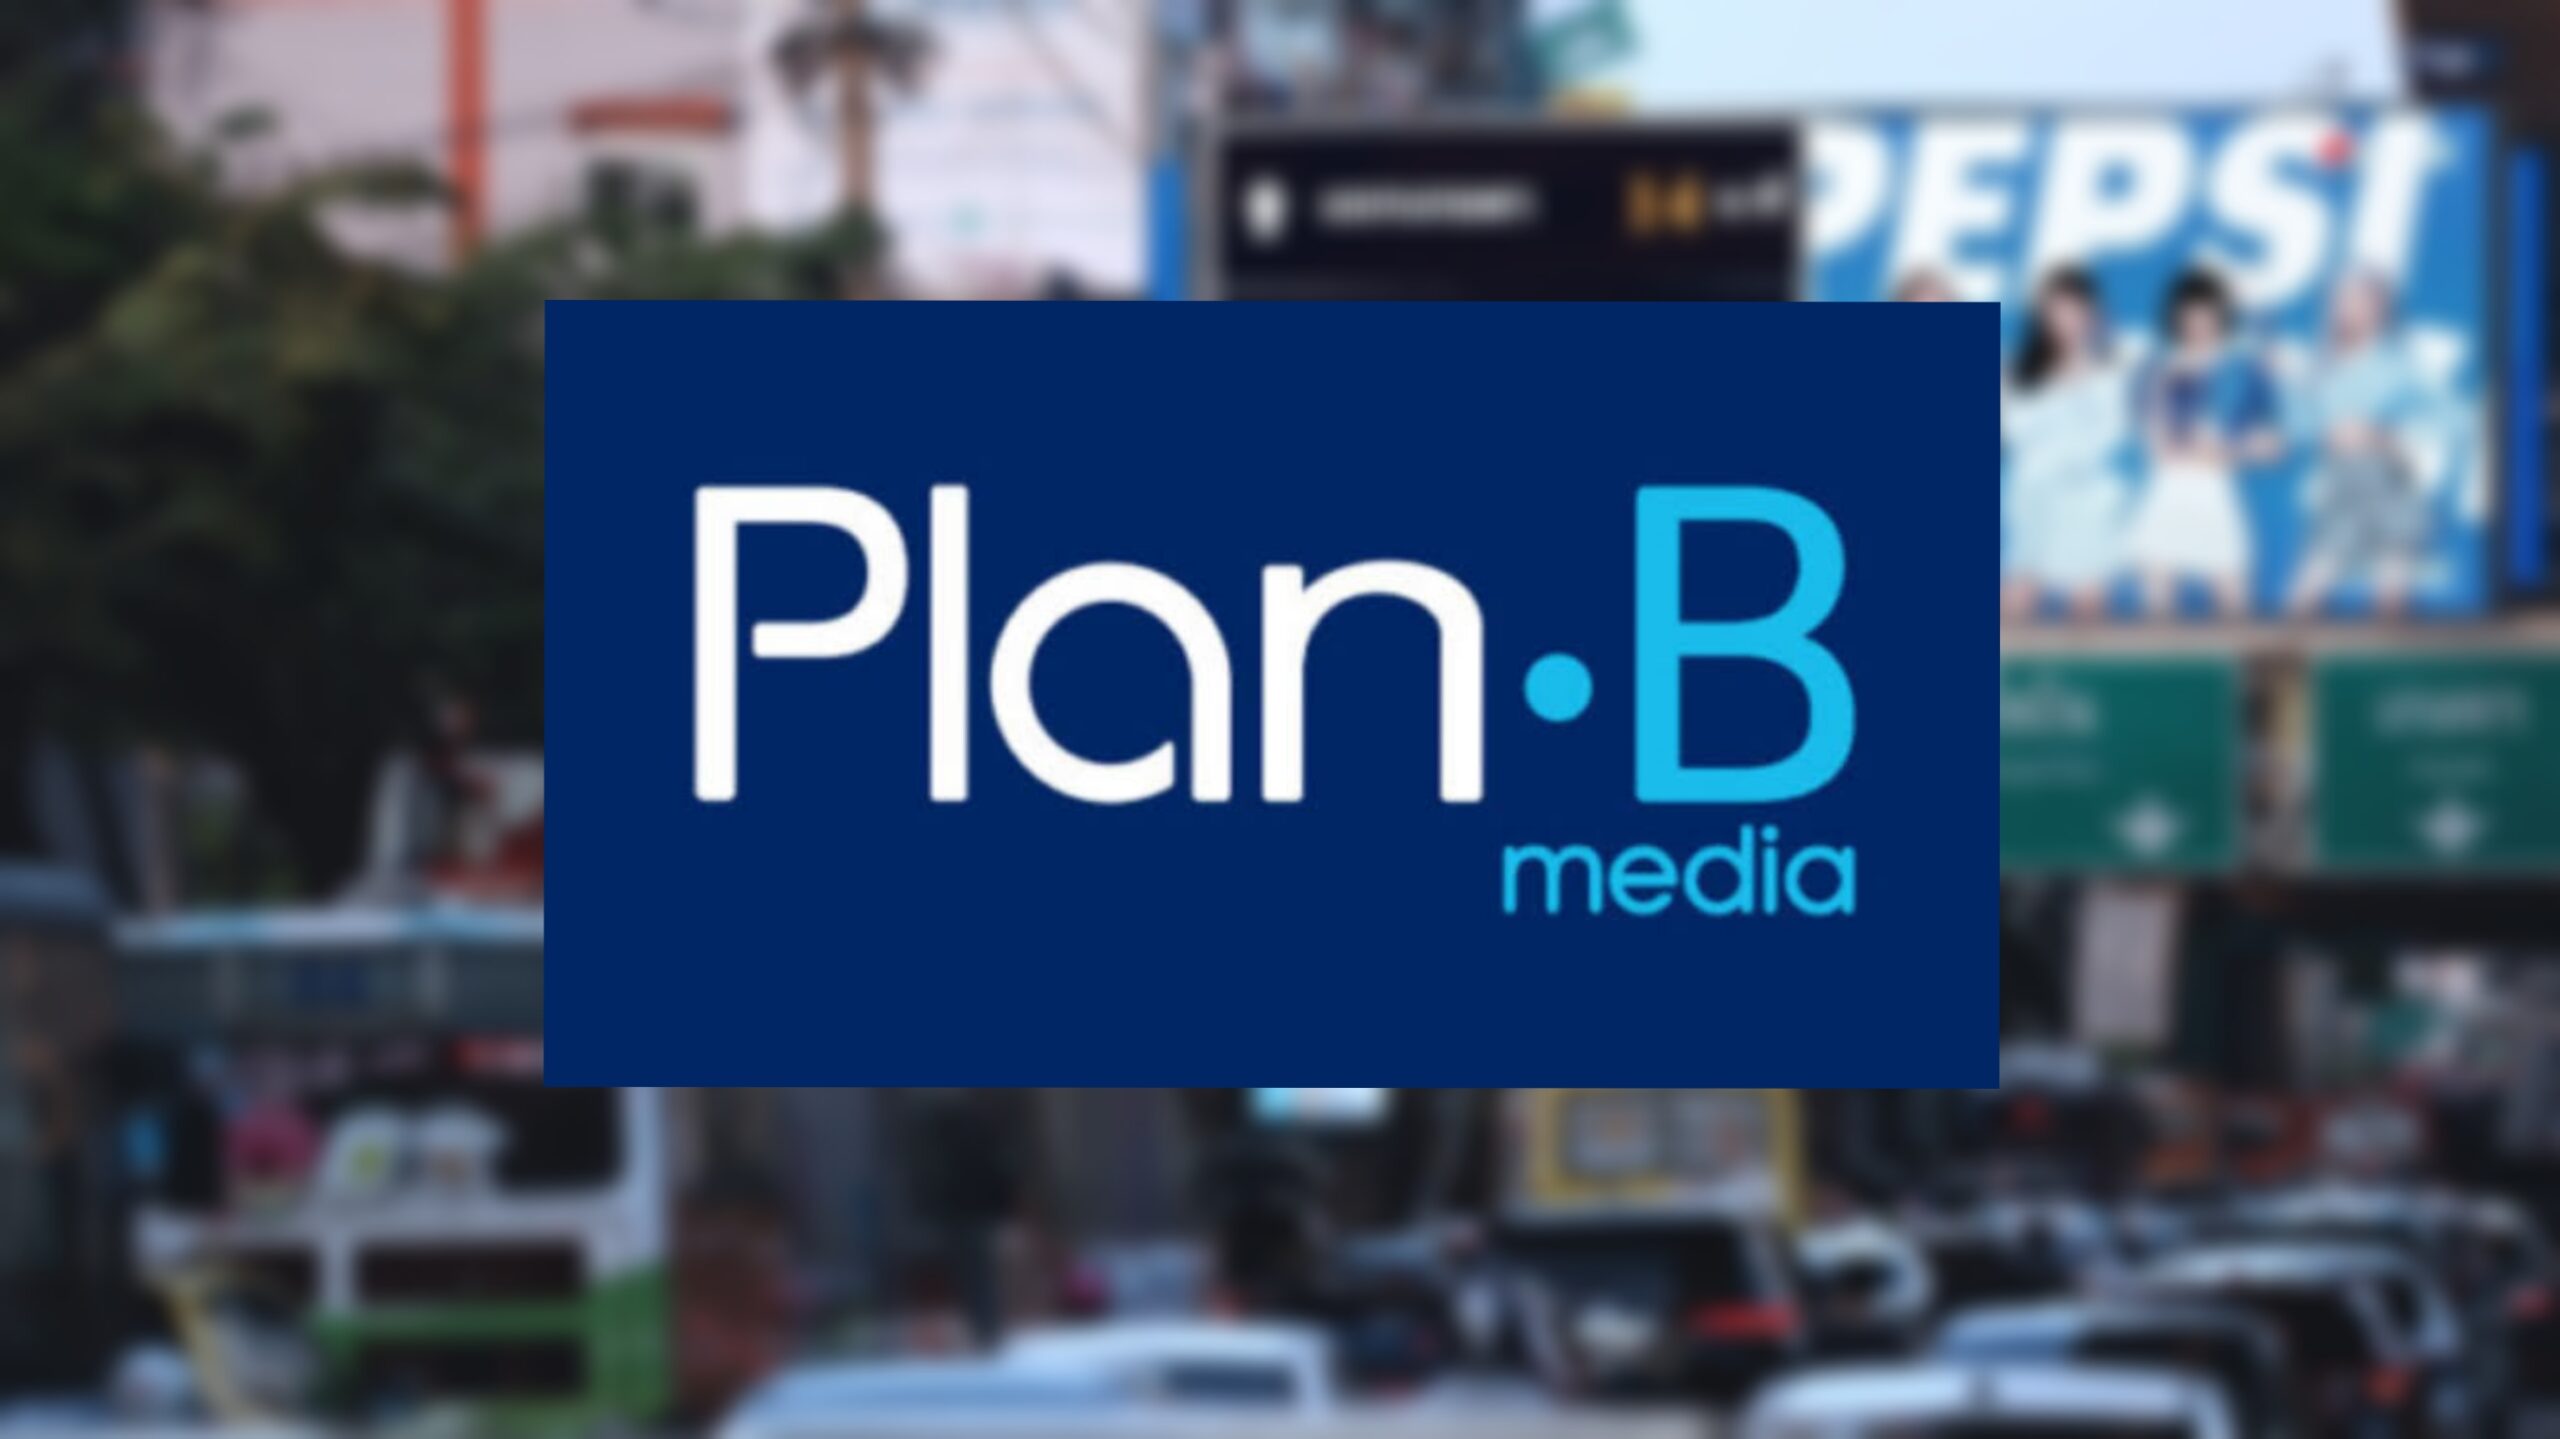 PLANB ตั้ง 2 บริษัทร่วมทุน รุกธุรกิจ “มวย-สื่อกีฬาทางเน็ต”  – การเงิน